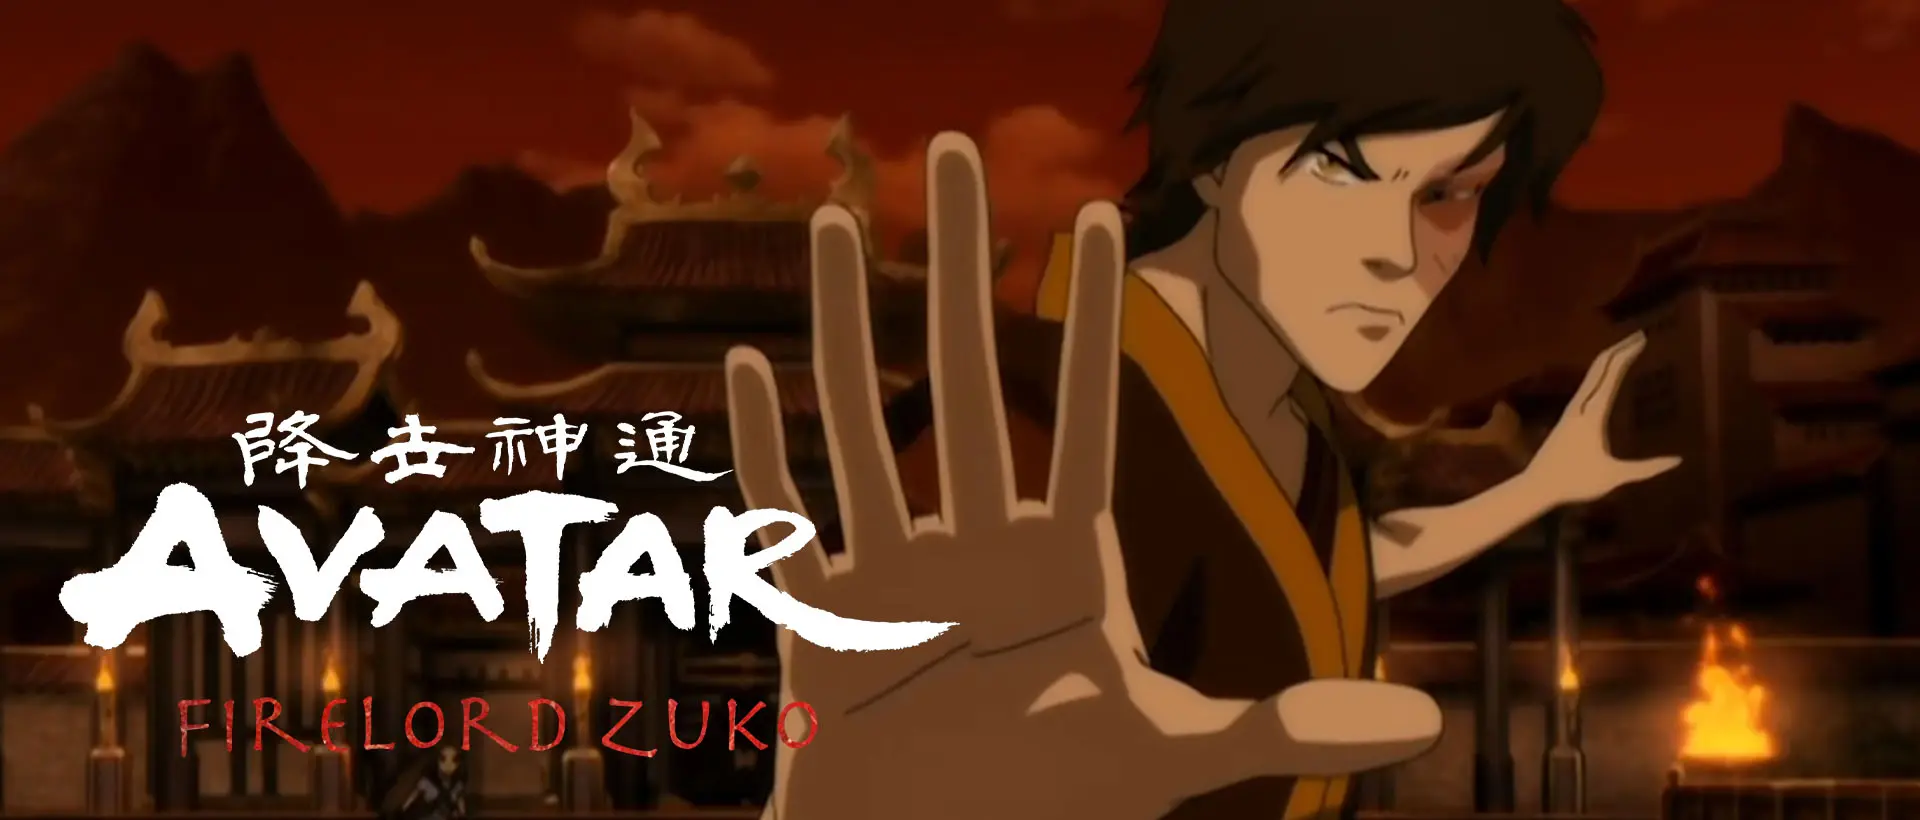 avatar firelord zuko animated movie 2026 banner